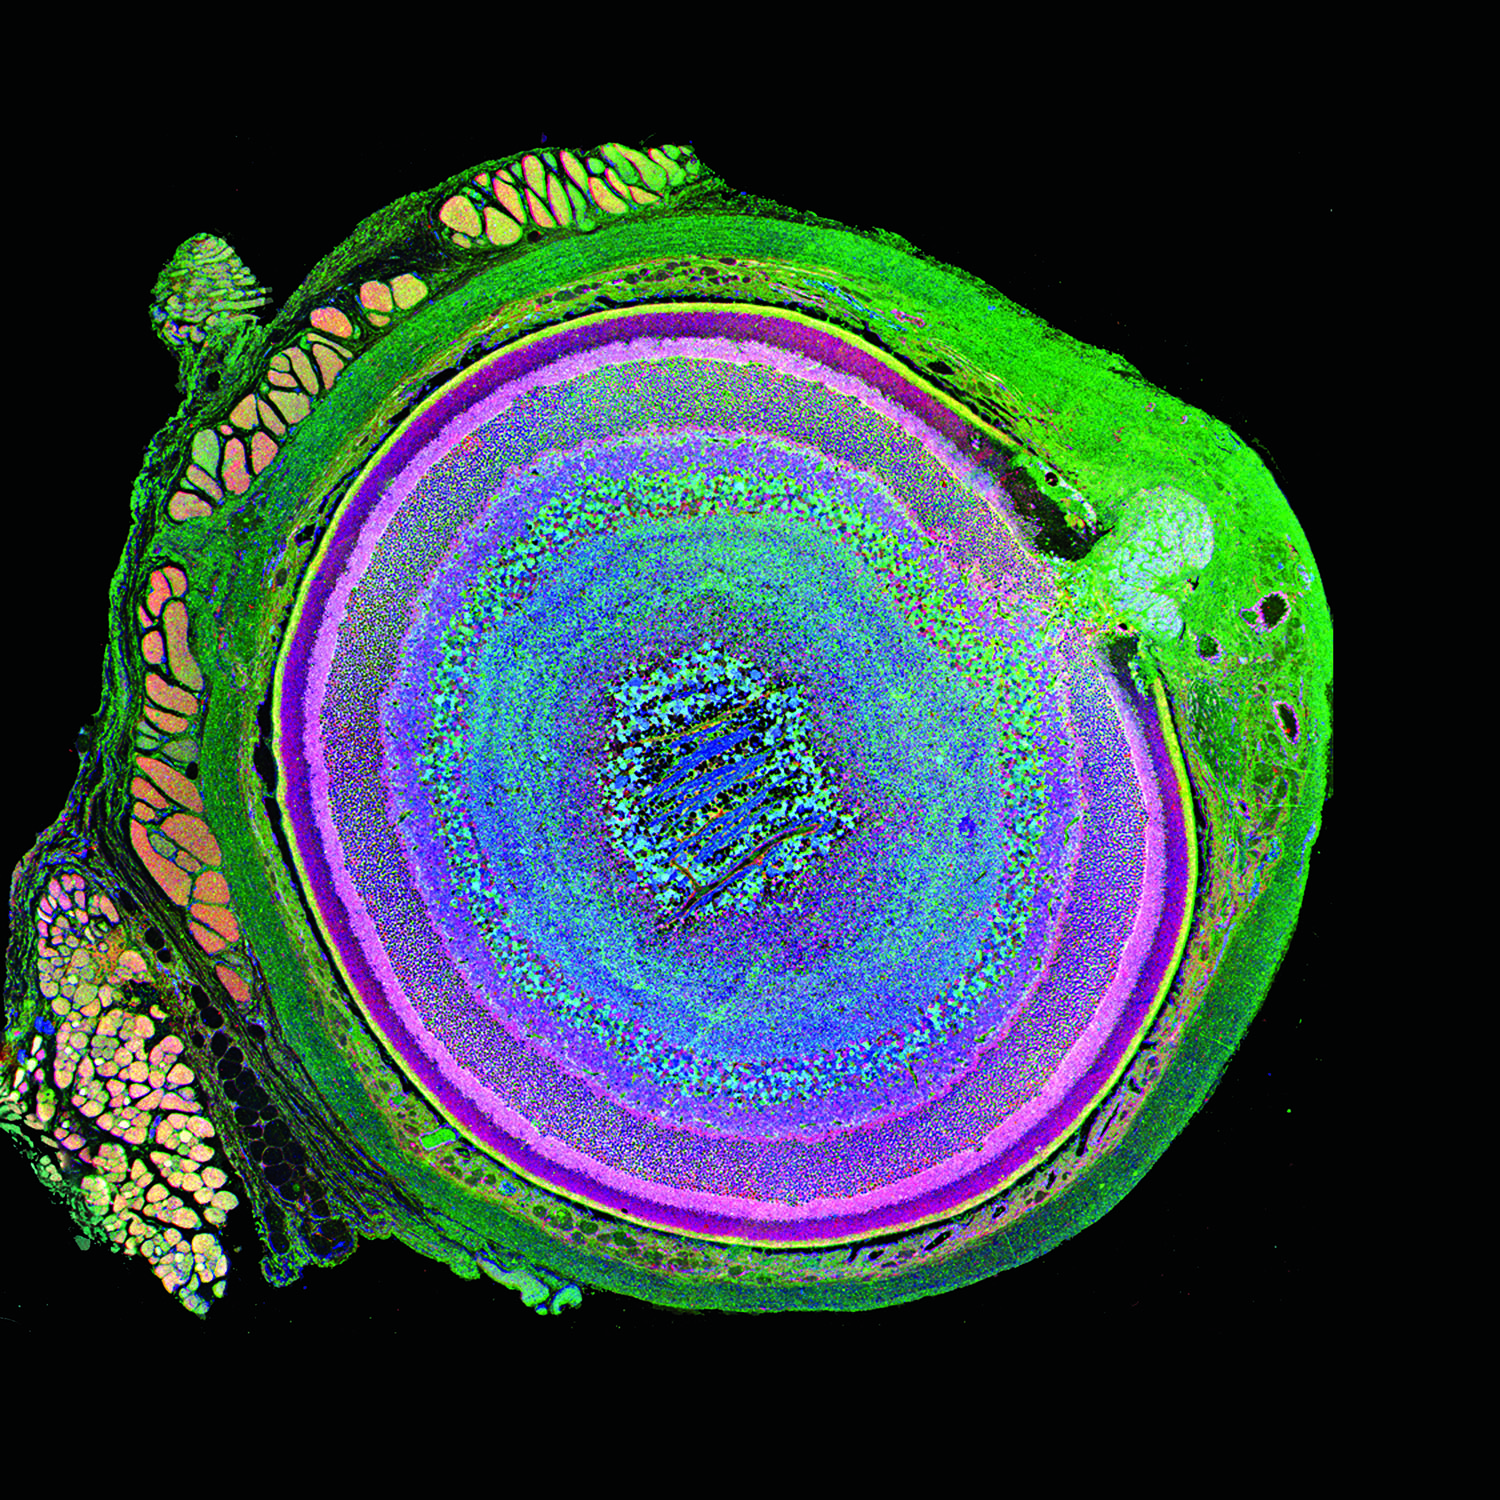 Metabolic snapshot of a mammalian retina.